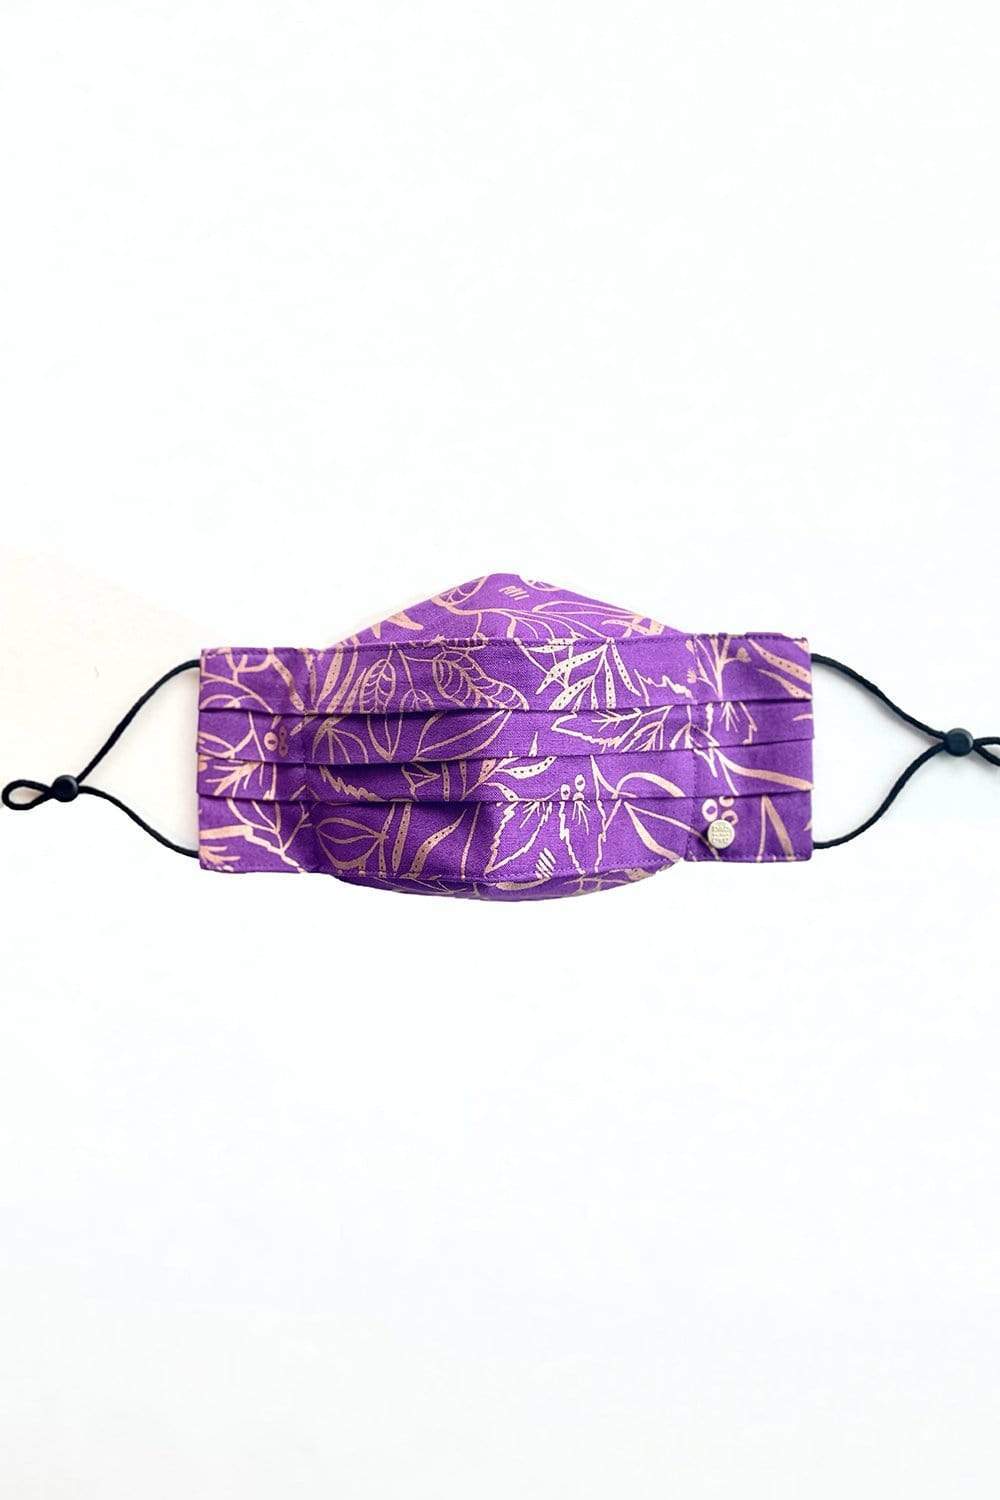 Safely Sip Face Masks Safely Sip Mask Tropical Gold Flower - Purple - Chloe Dao